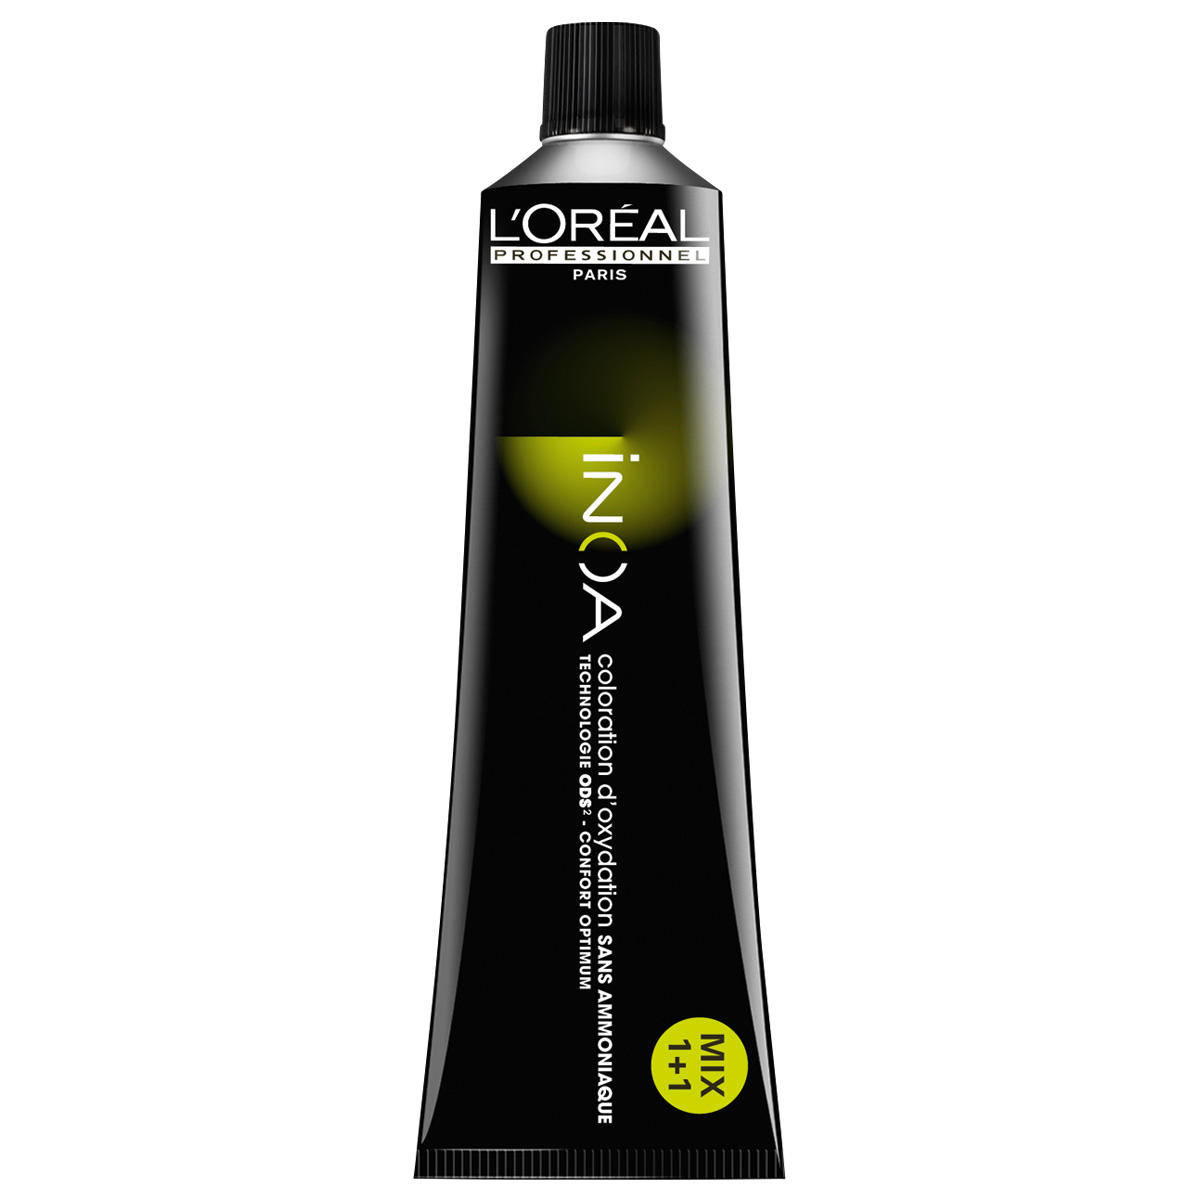 L'Oréal Professionnel Paris Coloration 10.21 Cenere Irisé biondo platino, tubo 60 ml - 1